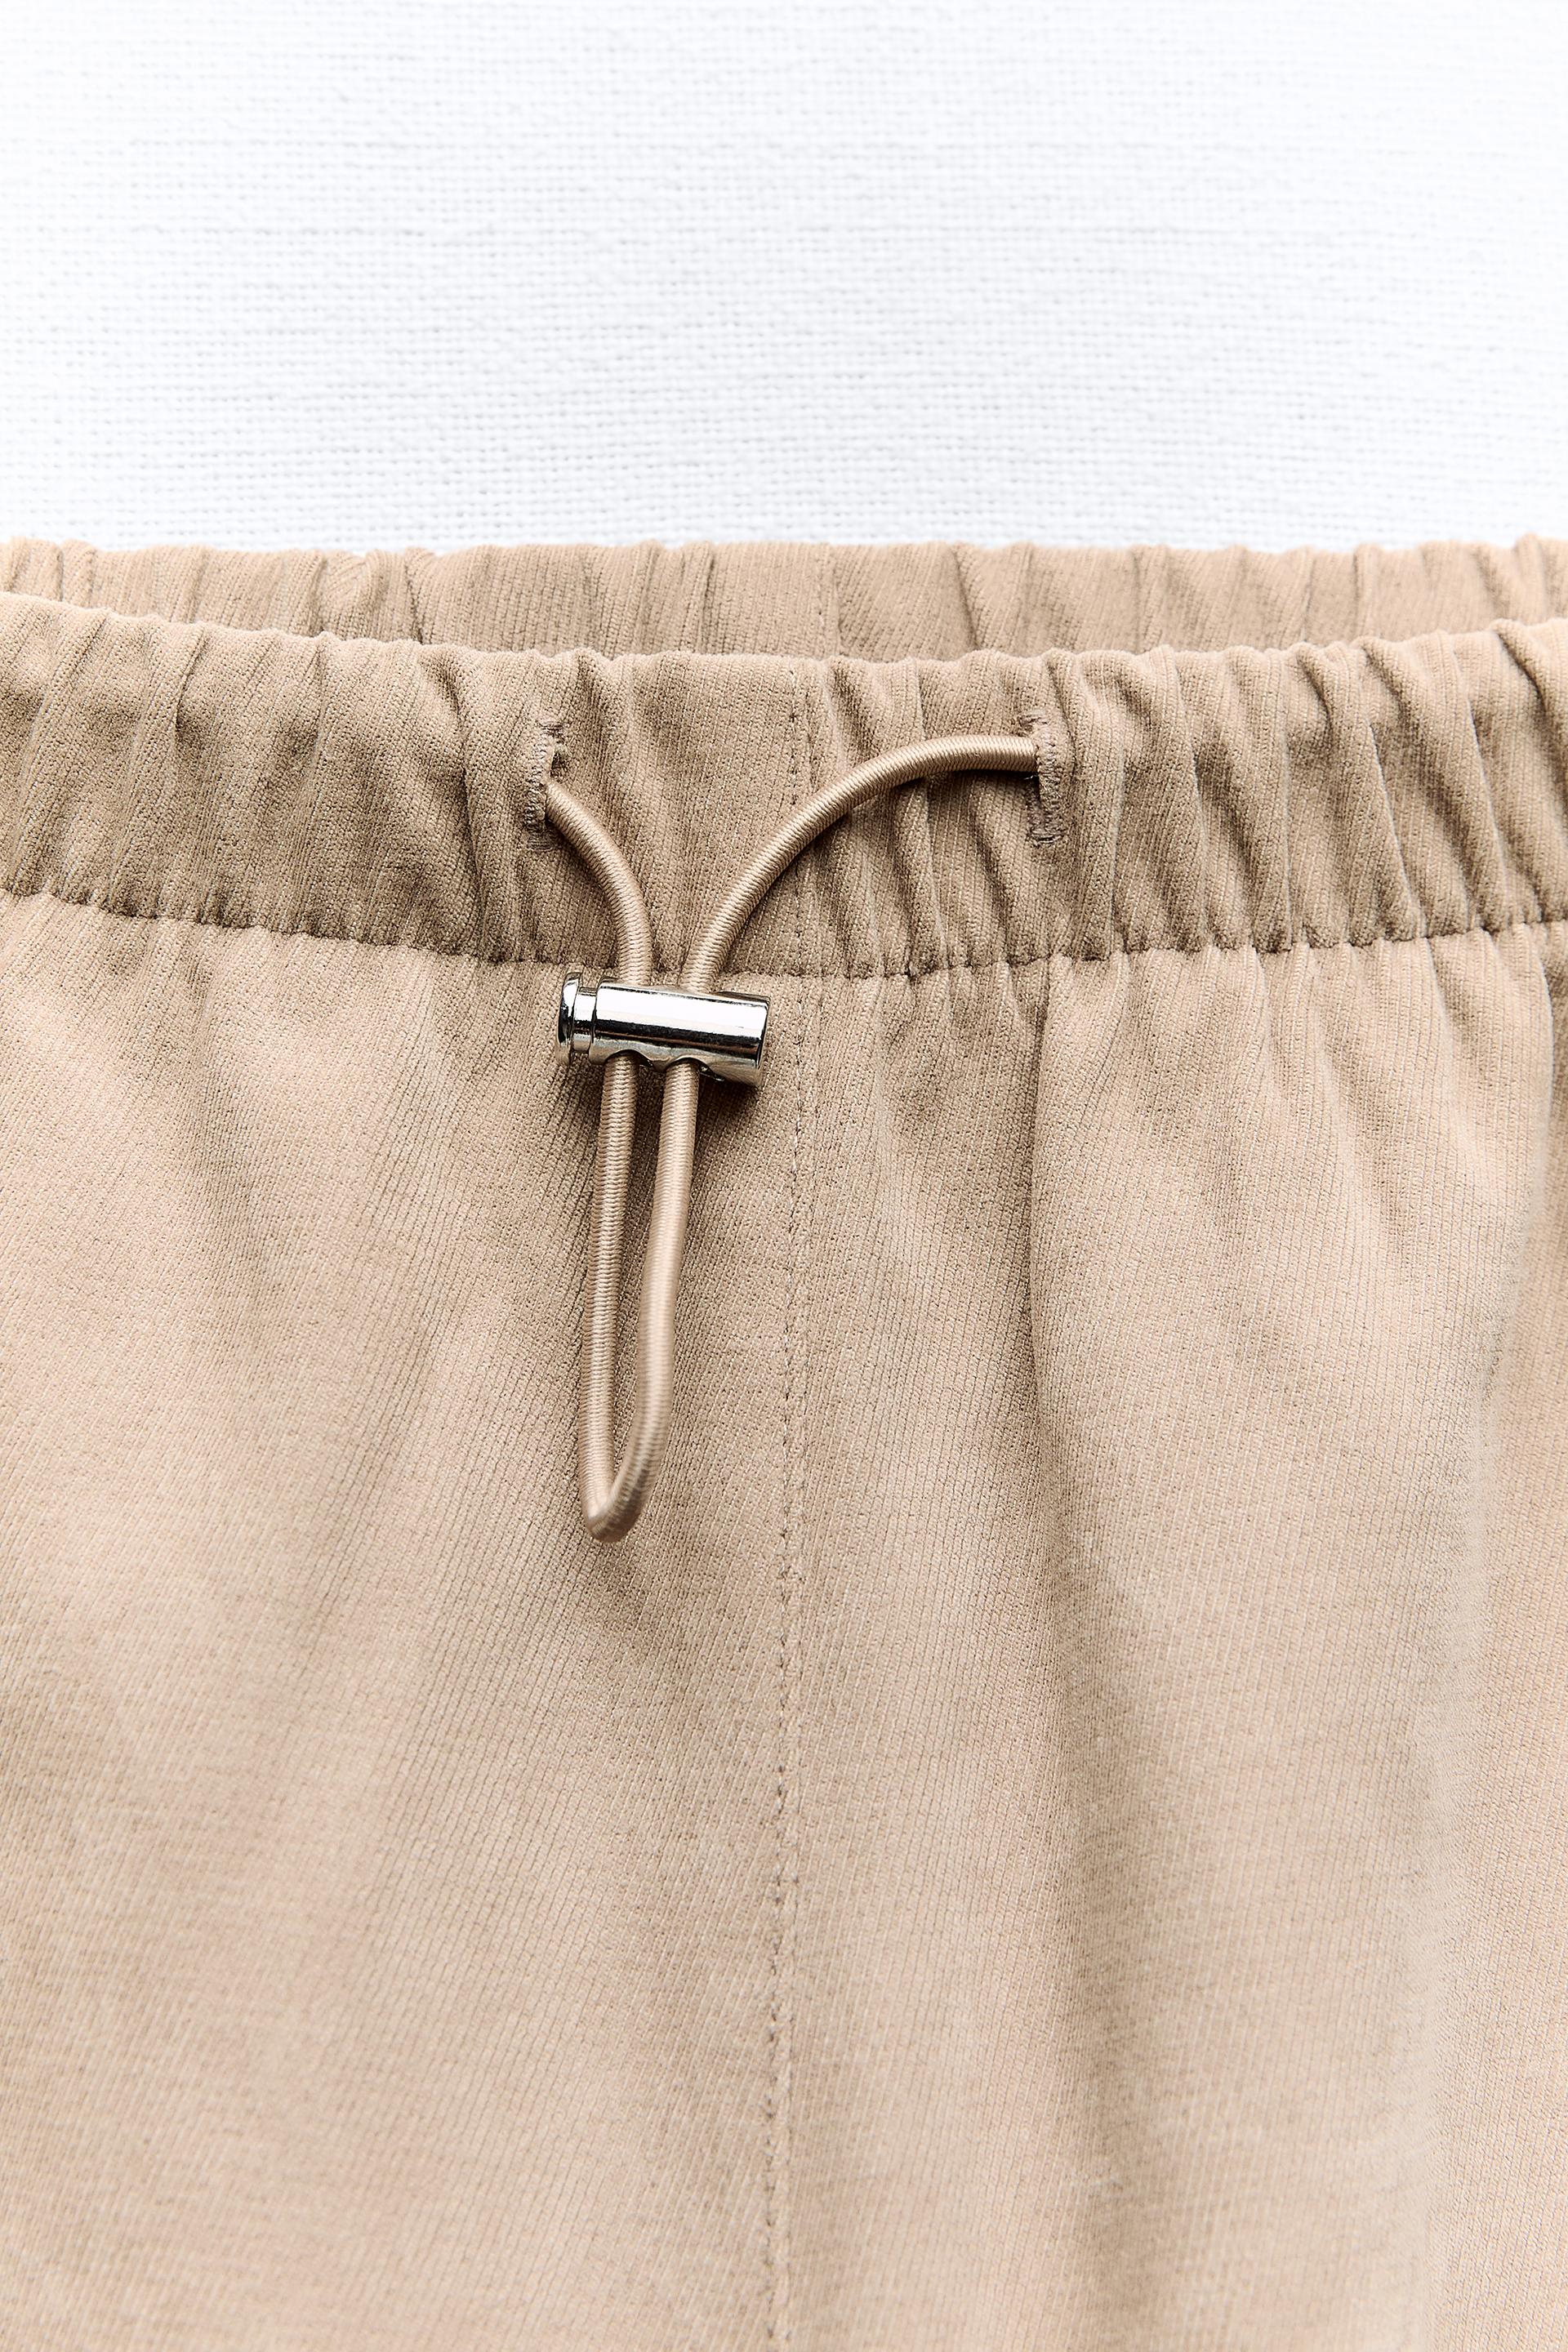 ZARA molten metal wide leg pantalons (XL) – The Thrifty Hippy